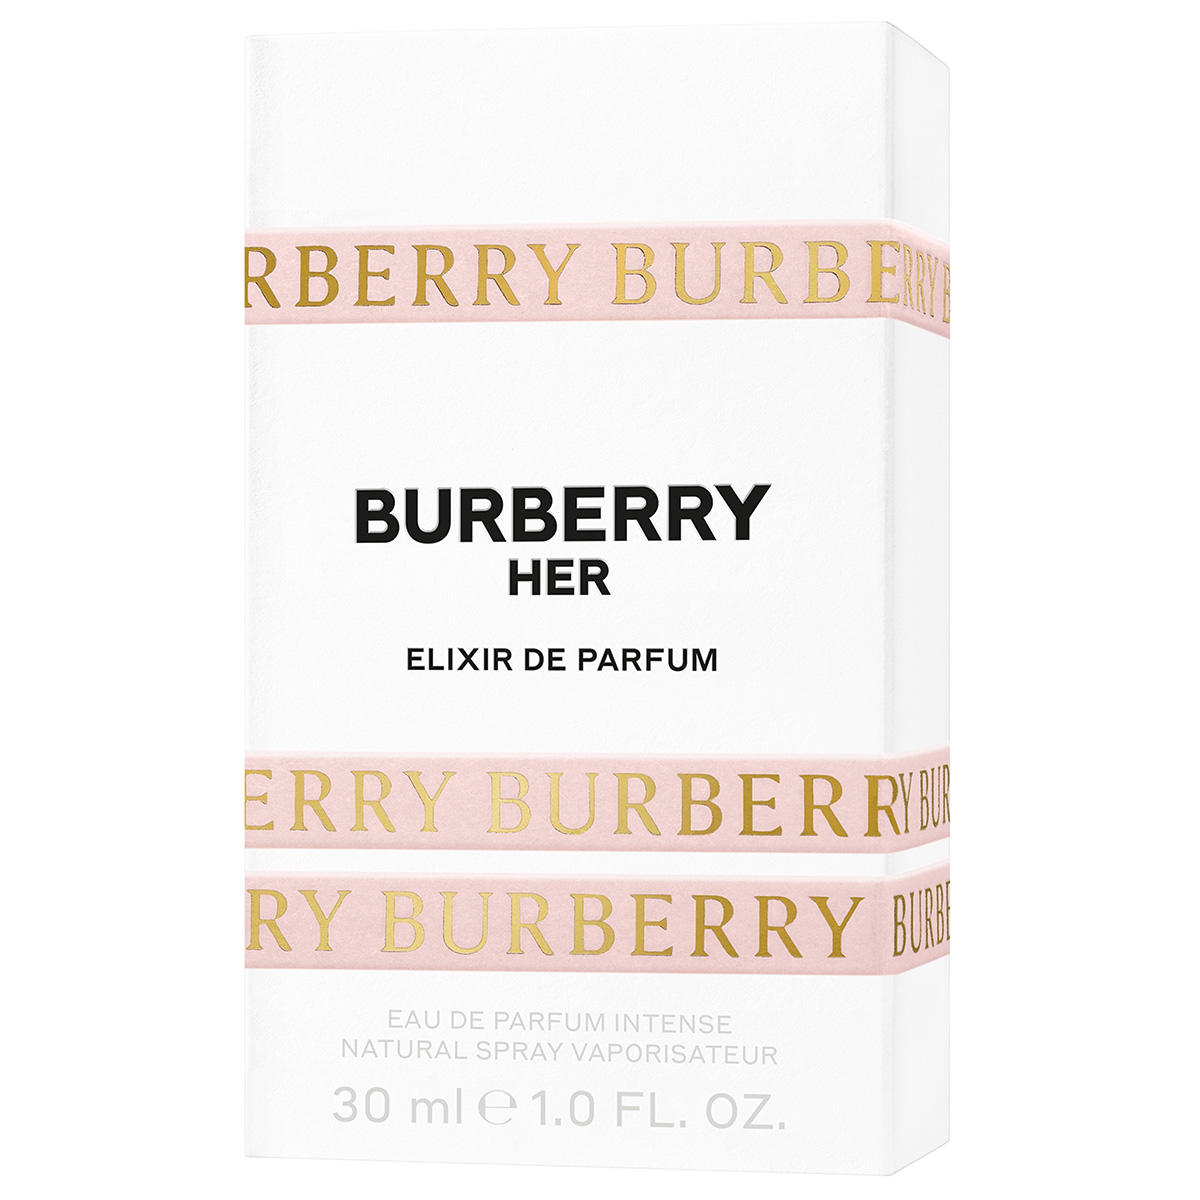 BURBERRY HER Elixir Eau de Parfum 30 ml - 3